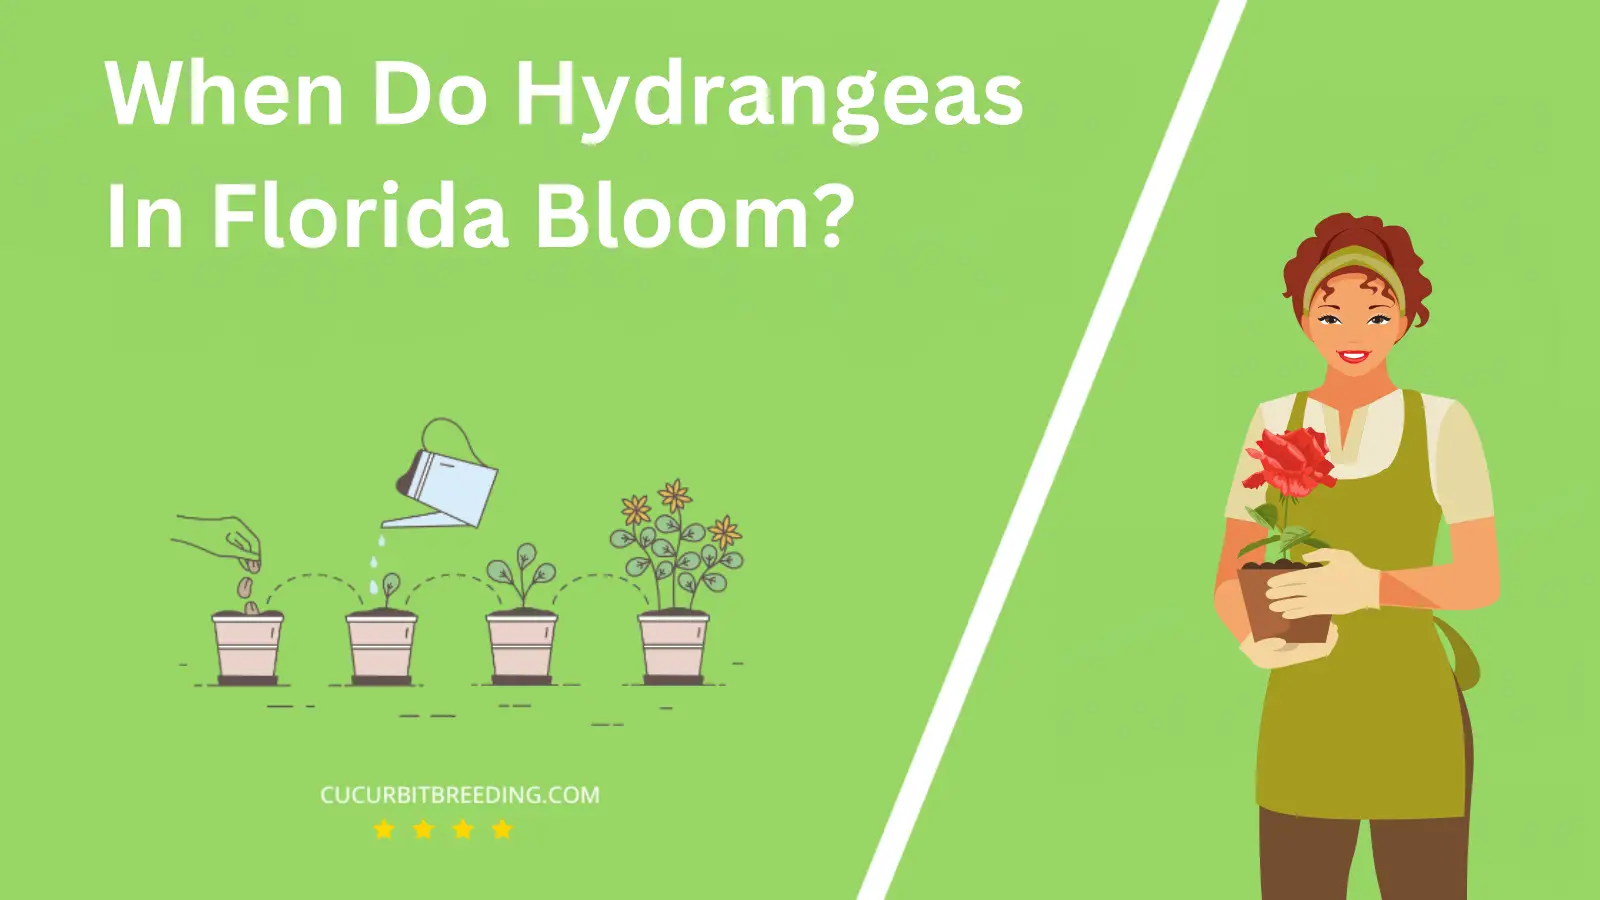 When Do Hydrangeas In Florida Bloom?